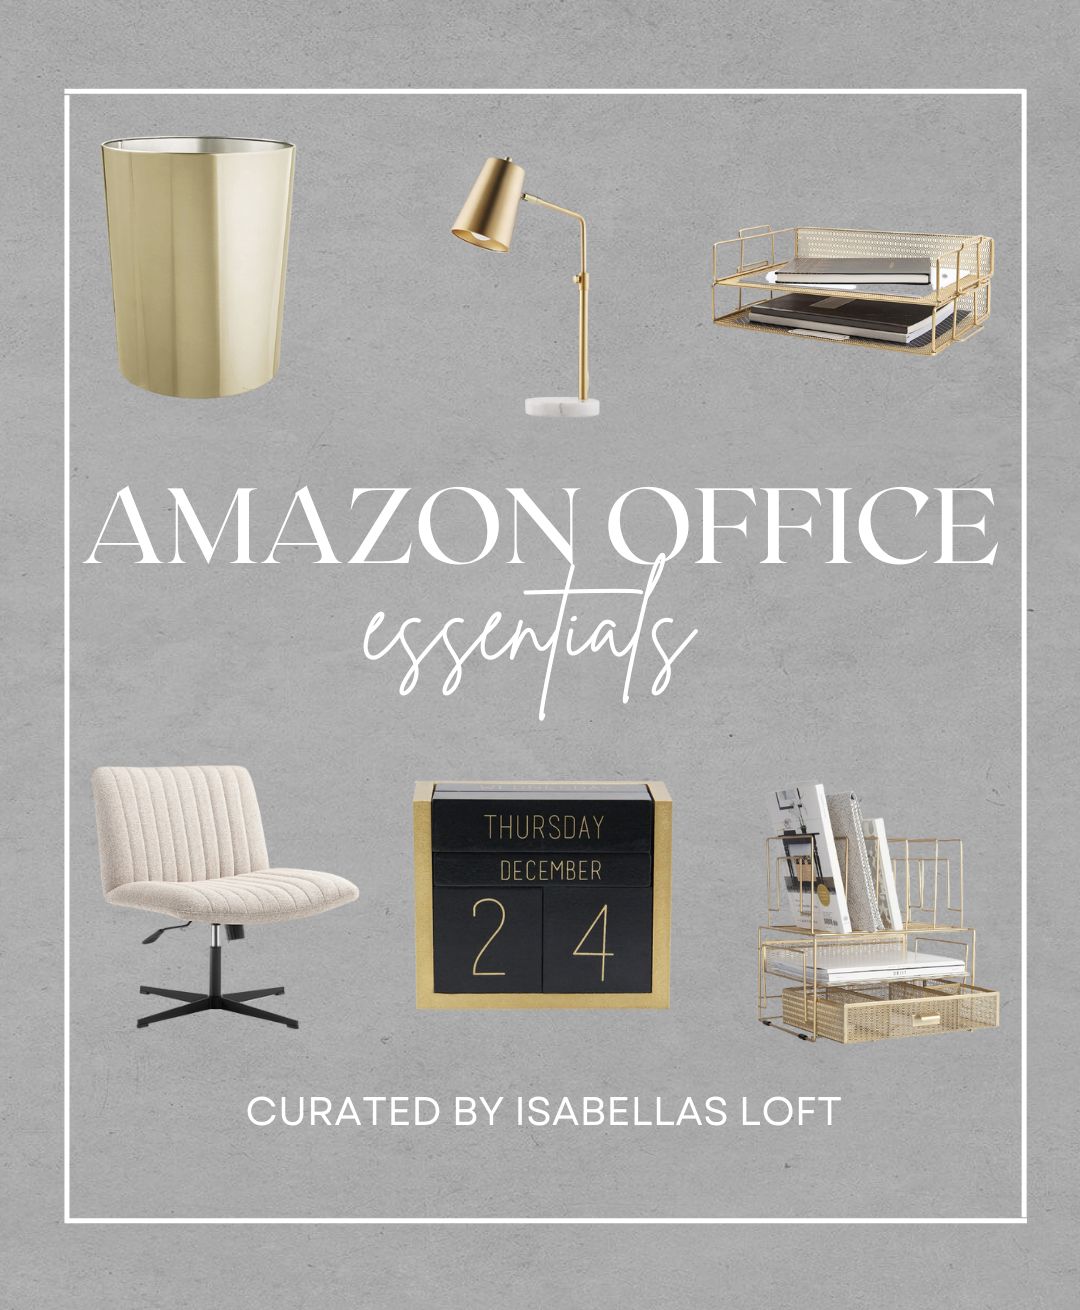 Isabella's Loft's Amazon Page | Amazon (US)